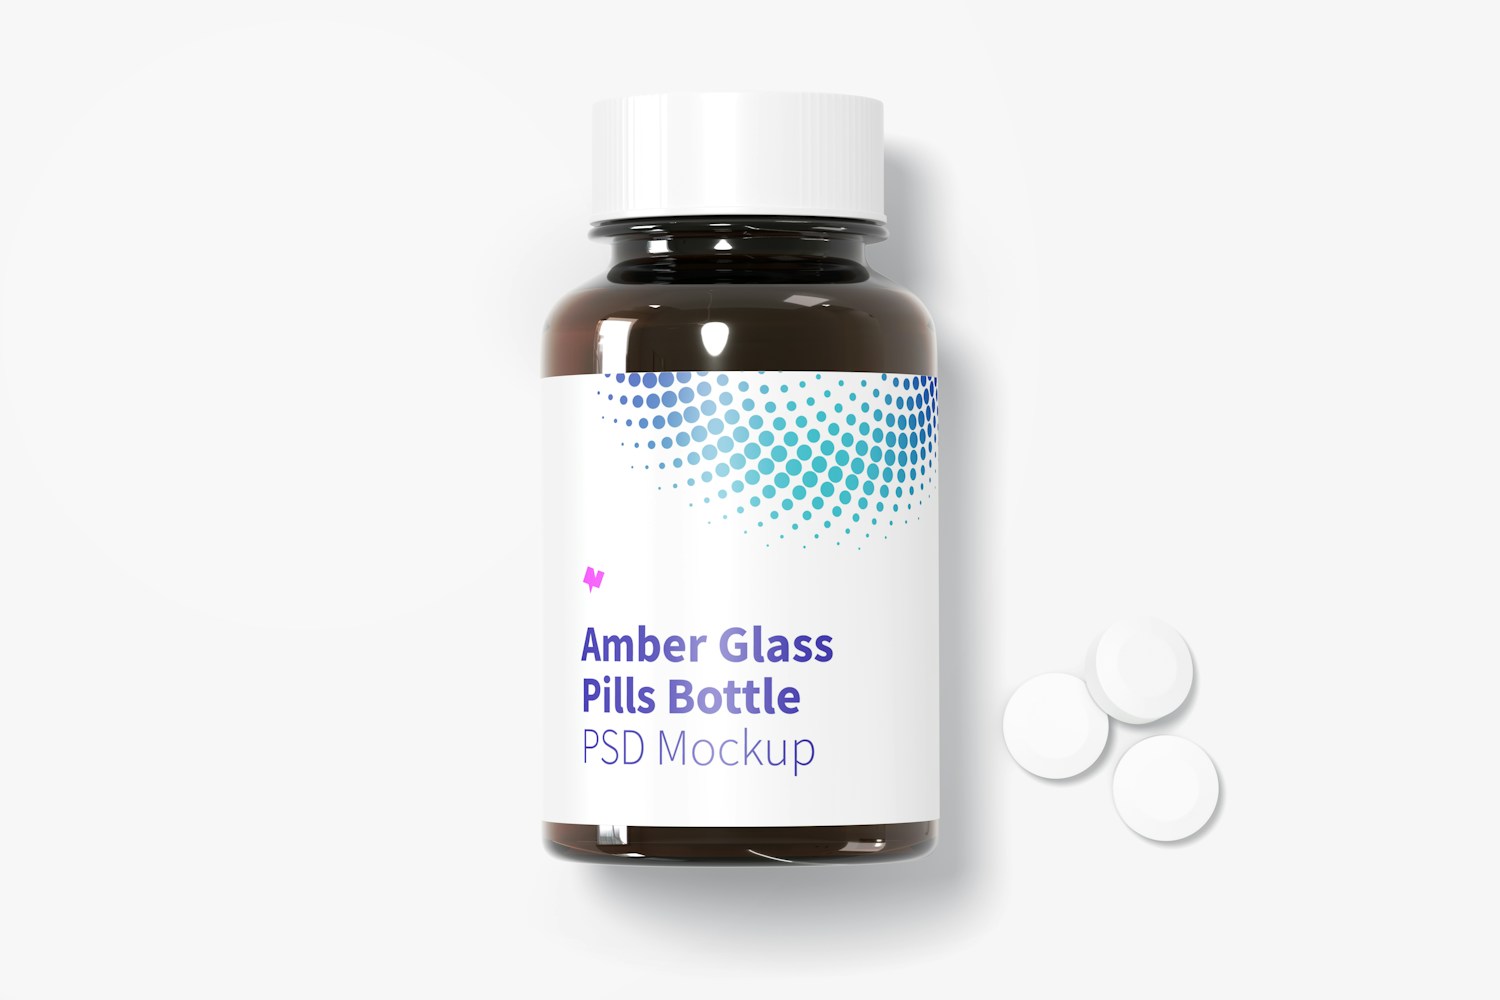 Amber Glass Pills Bottle Mockup, Top View